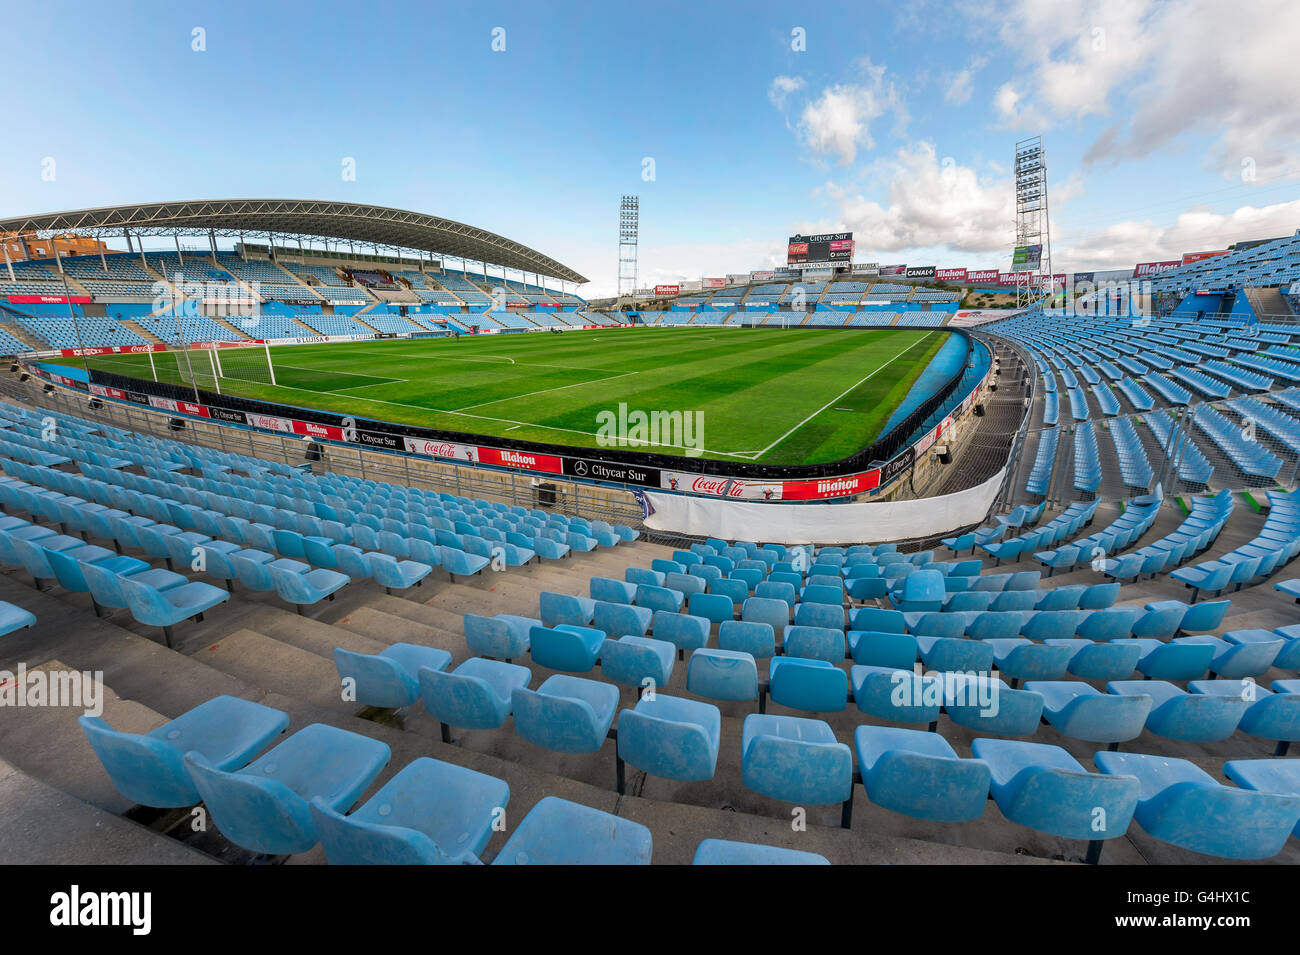 FC Getafe Stadium-Coliseum Alfonso Pérez Foto stock - Alamy